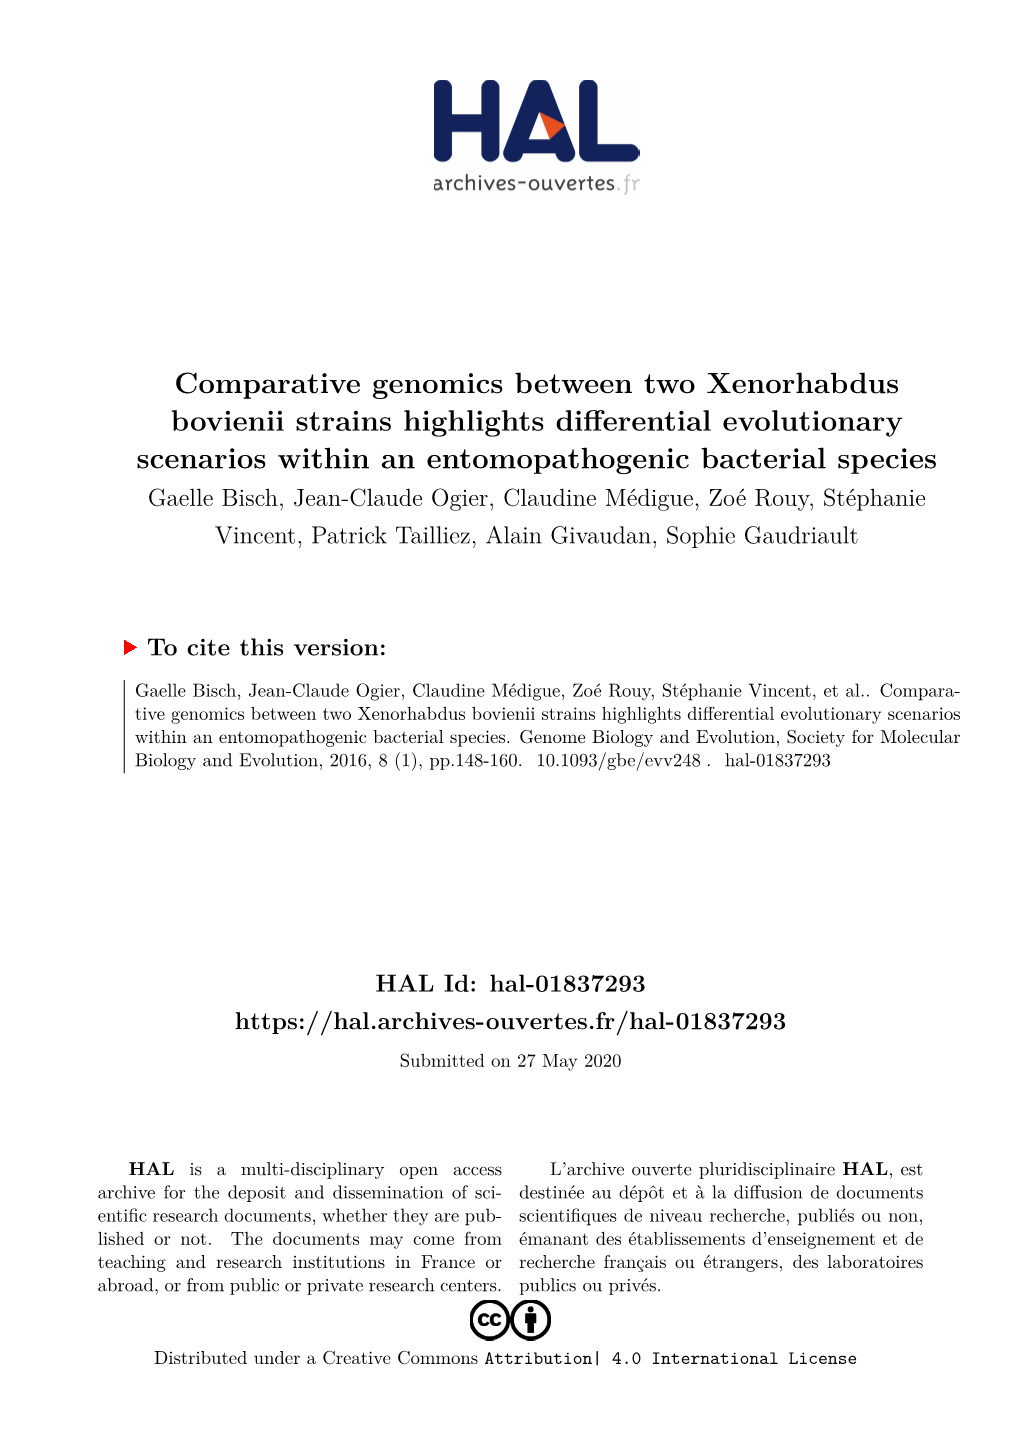 Comparative Genomics Between Two Xenorhabdus Bovienii Strains